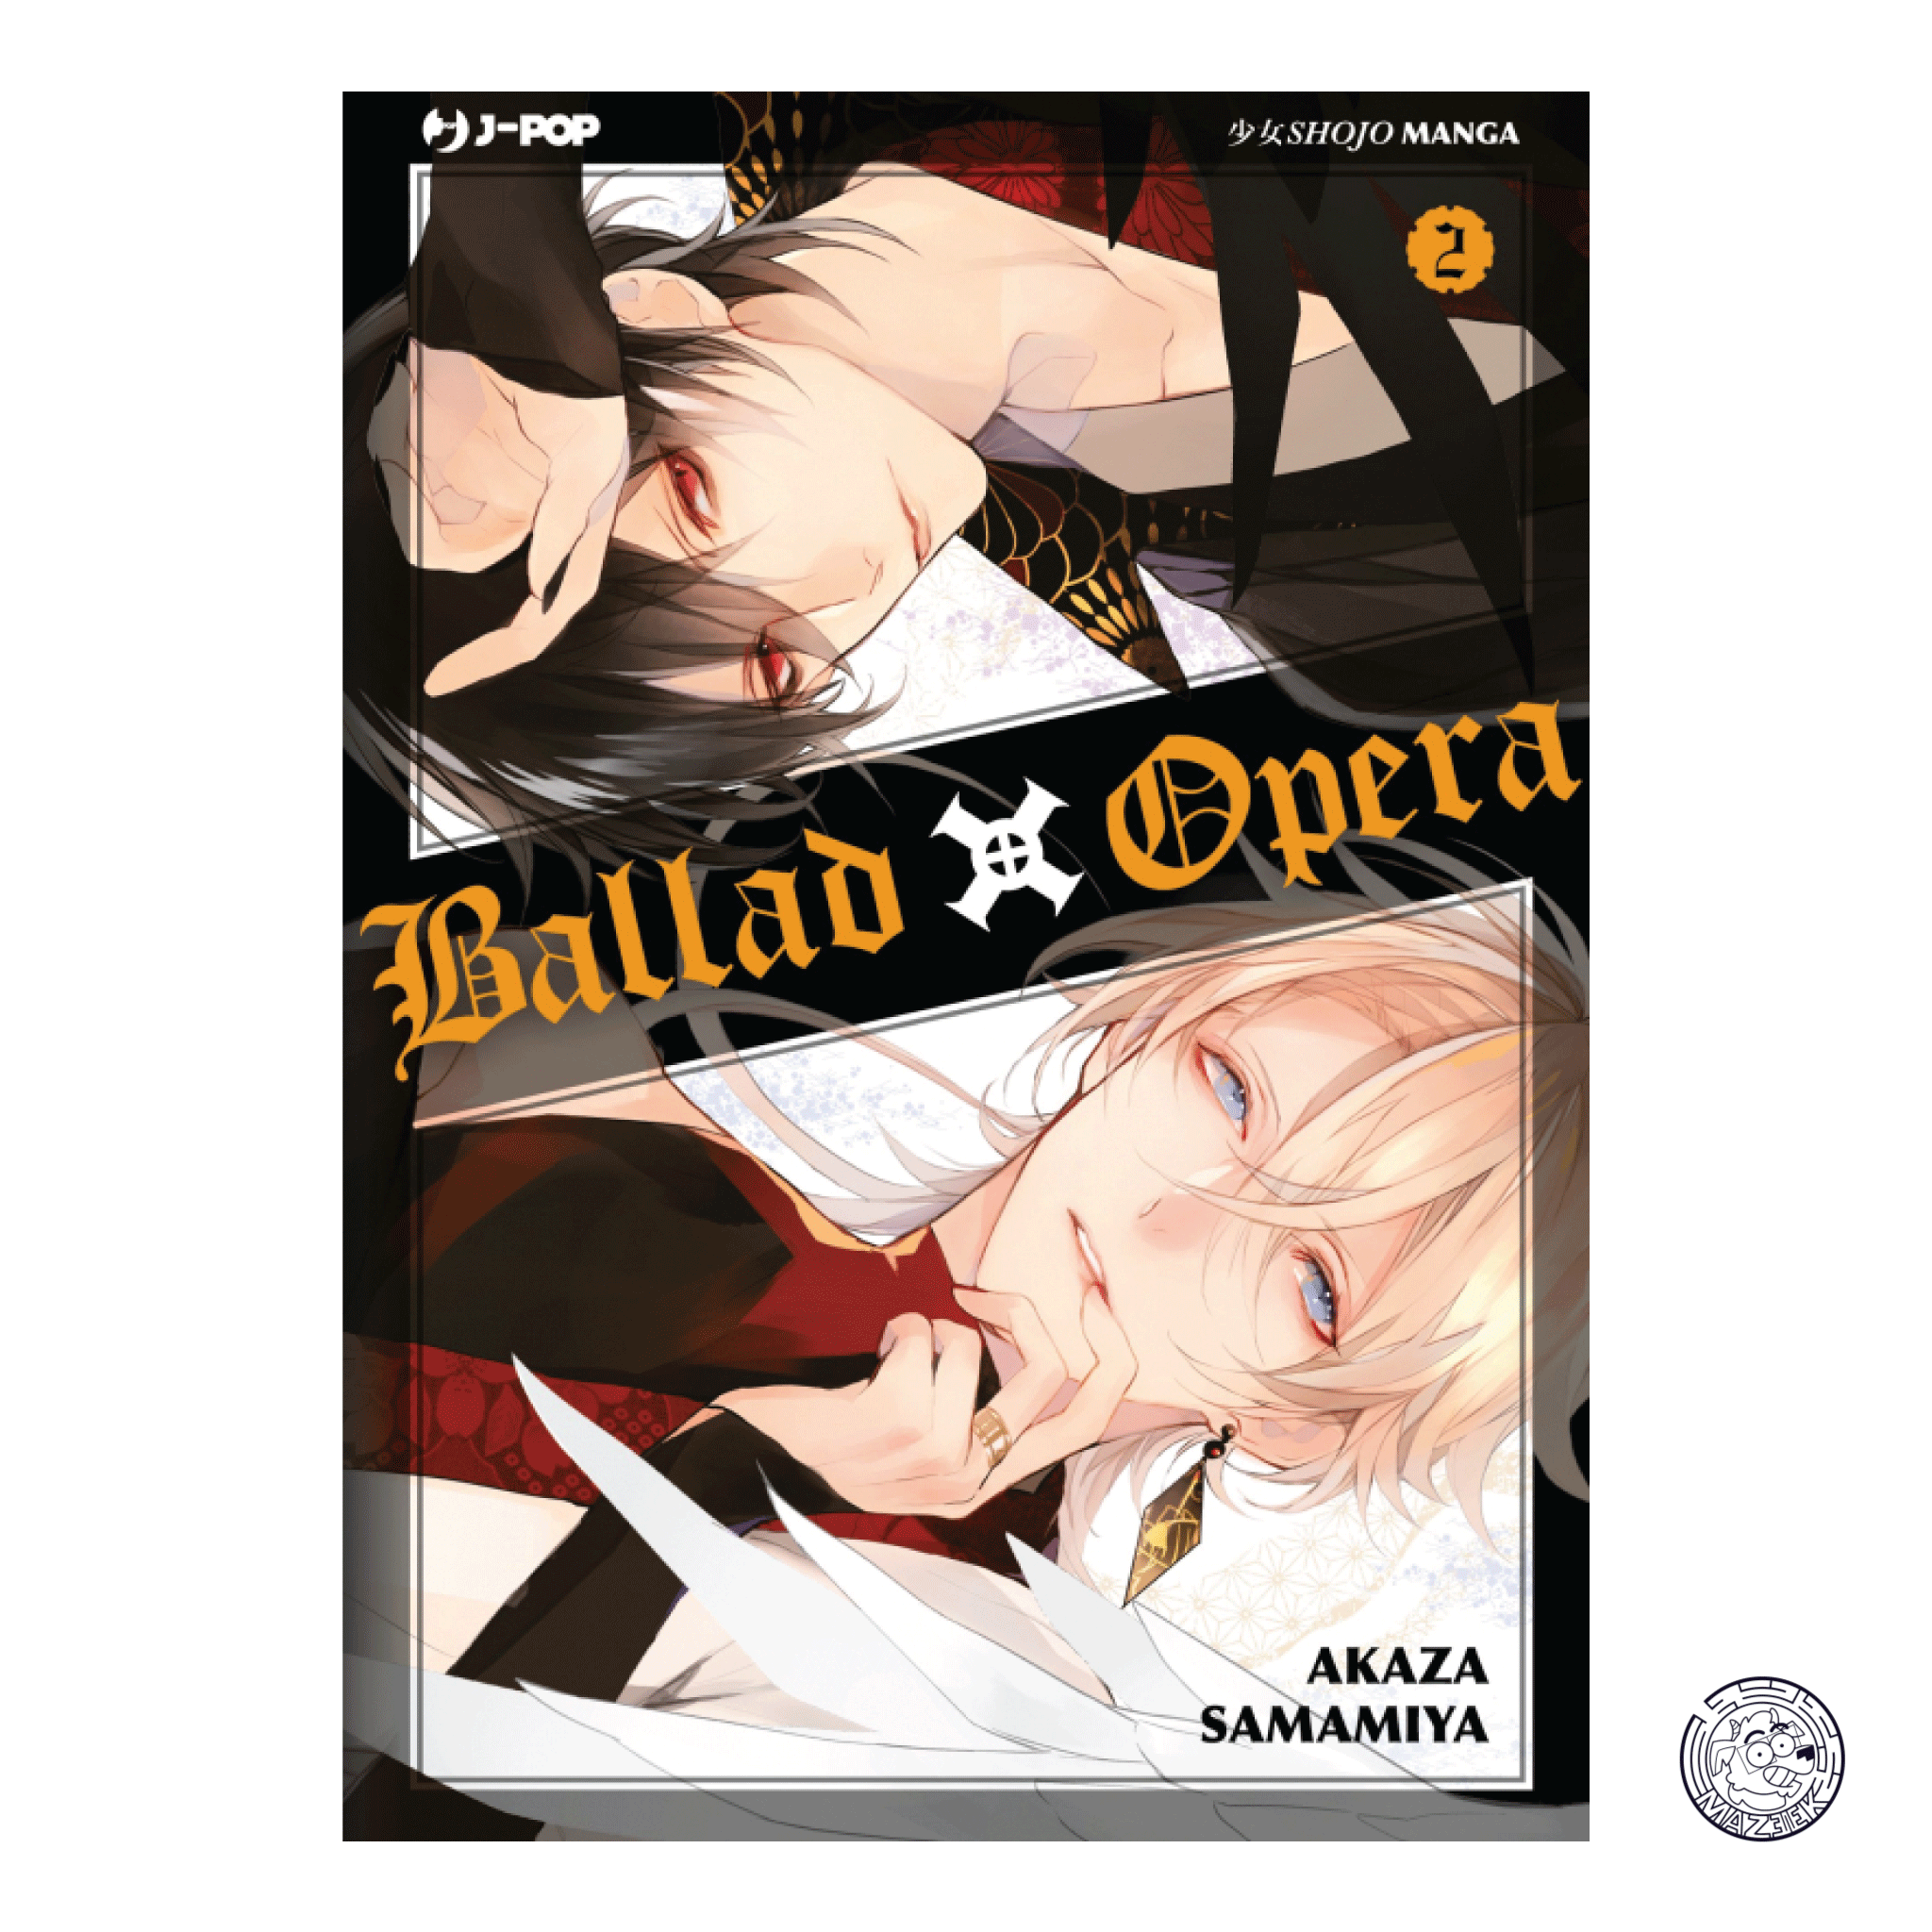 Ballad X Opera 02